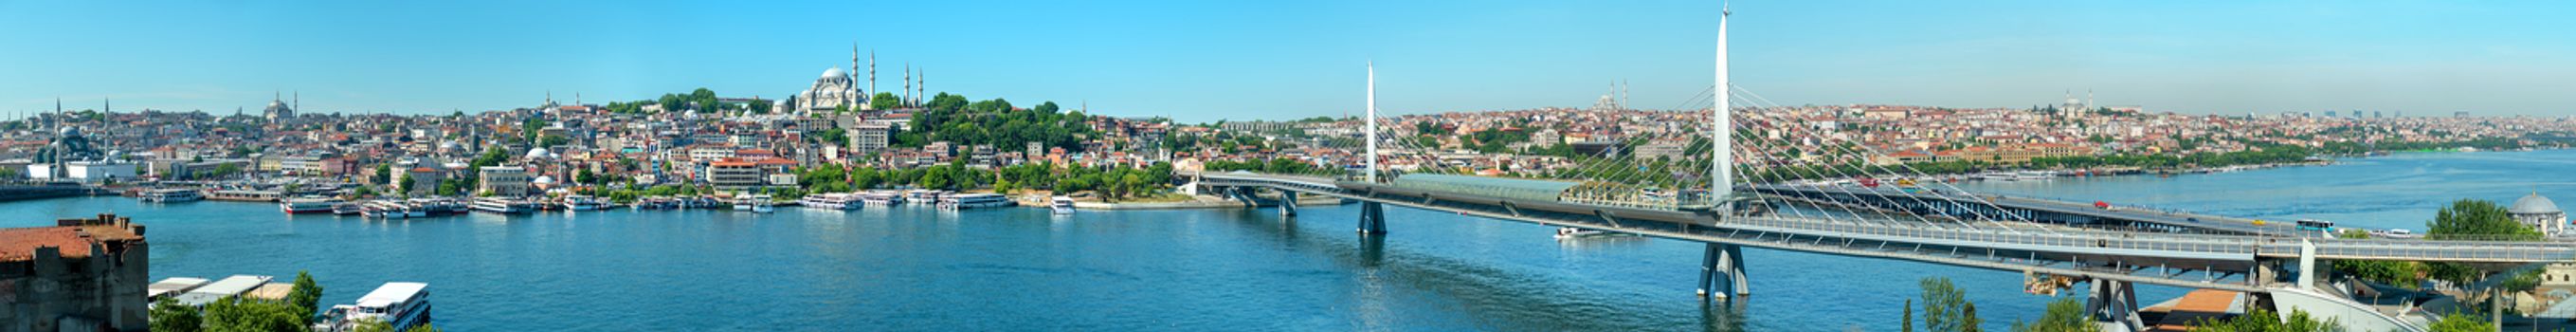 Panorama Metro station on Golden Horn bridge in Istanbul, Turkey